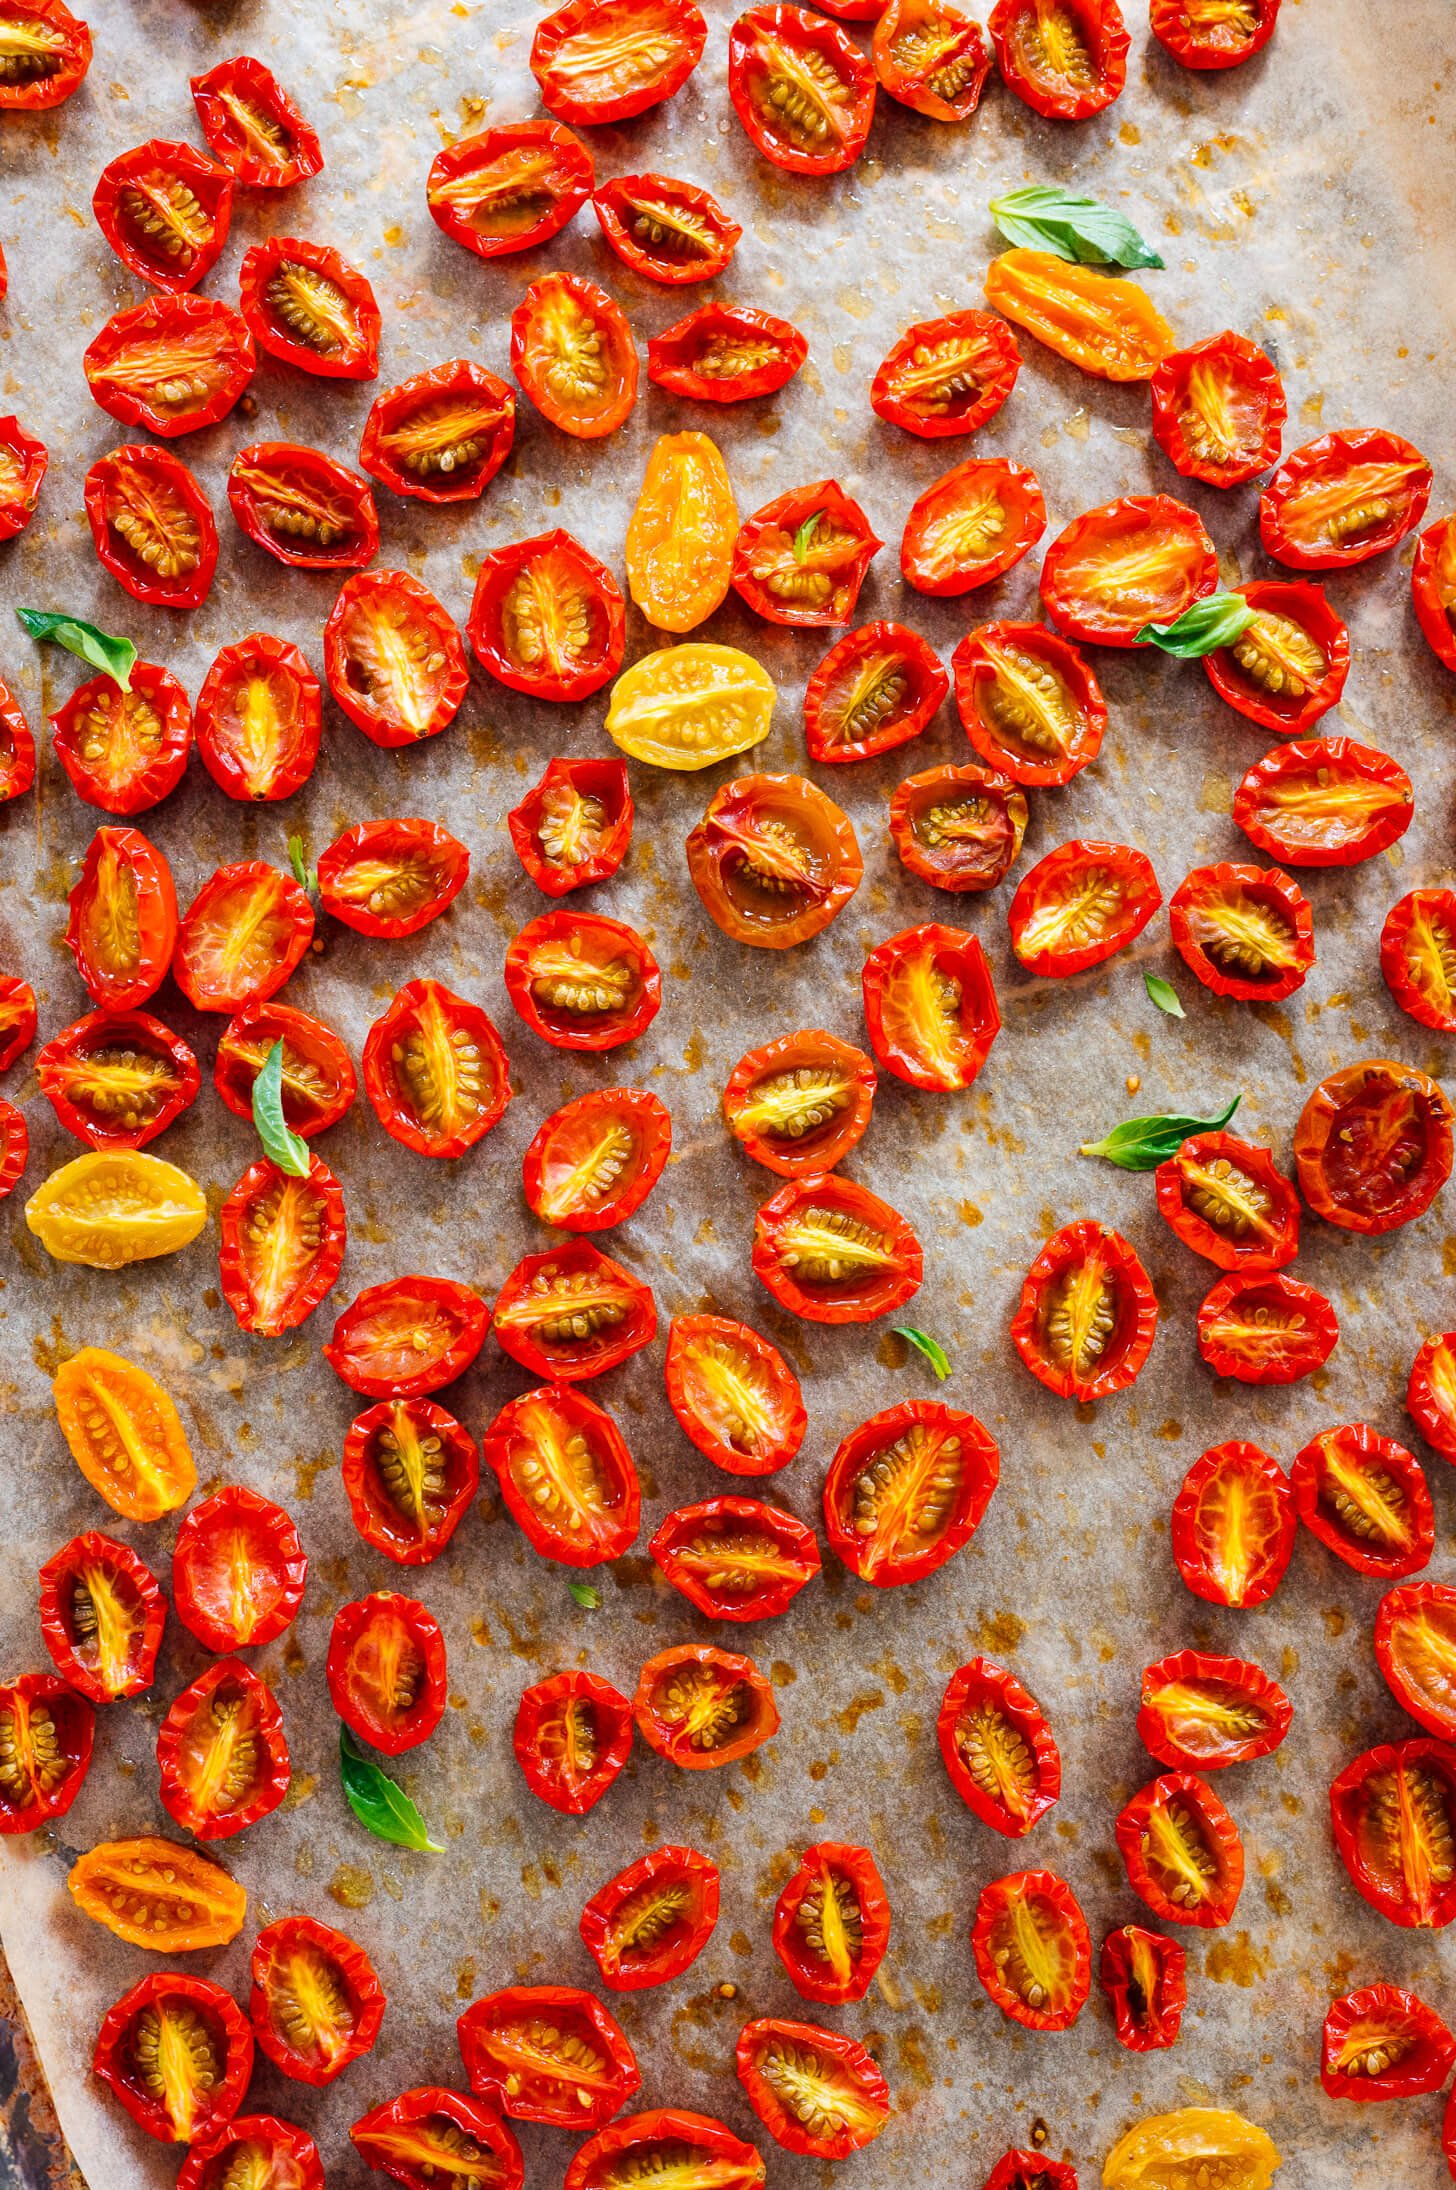 roasted cherry tomatoes recipe